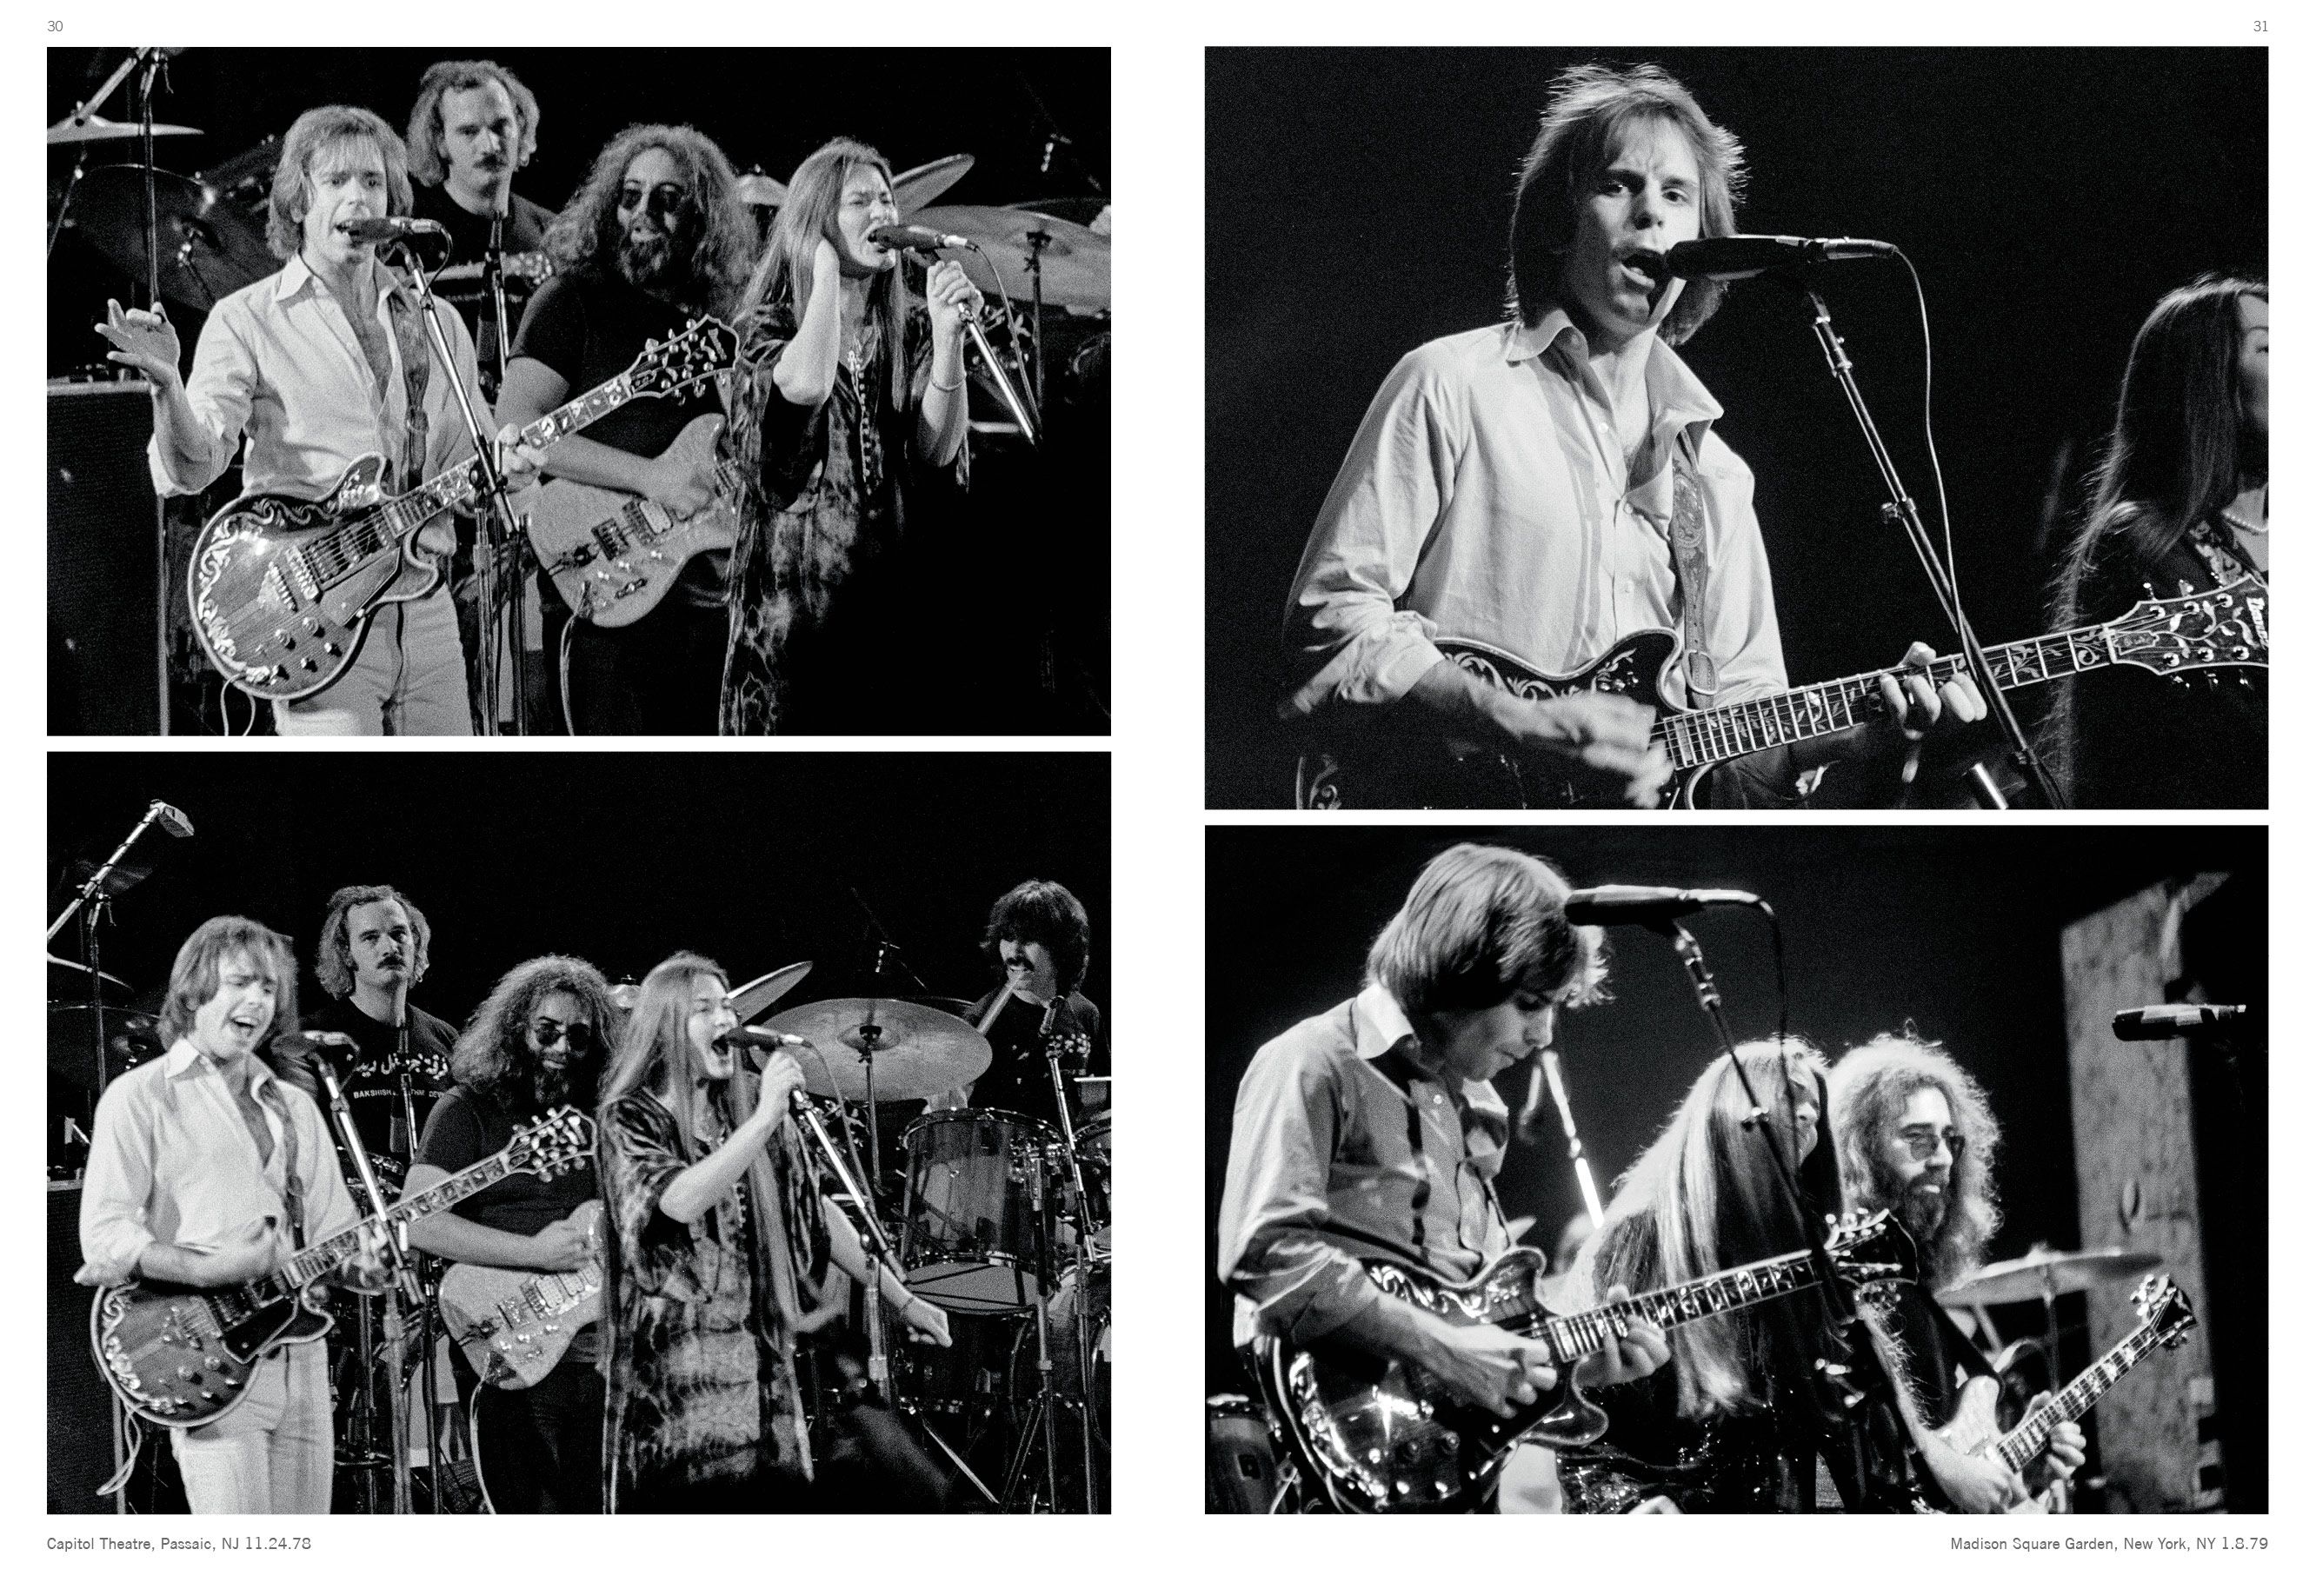 Grateful Dead, November 1978, Passaic N.J., and January 1979, New York City